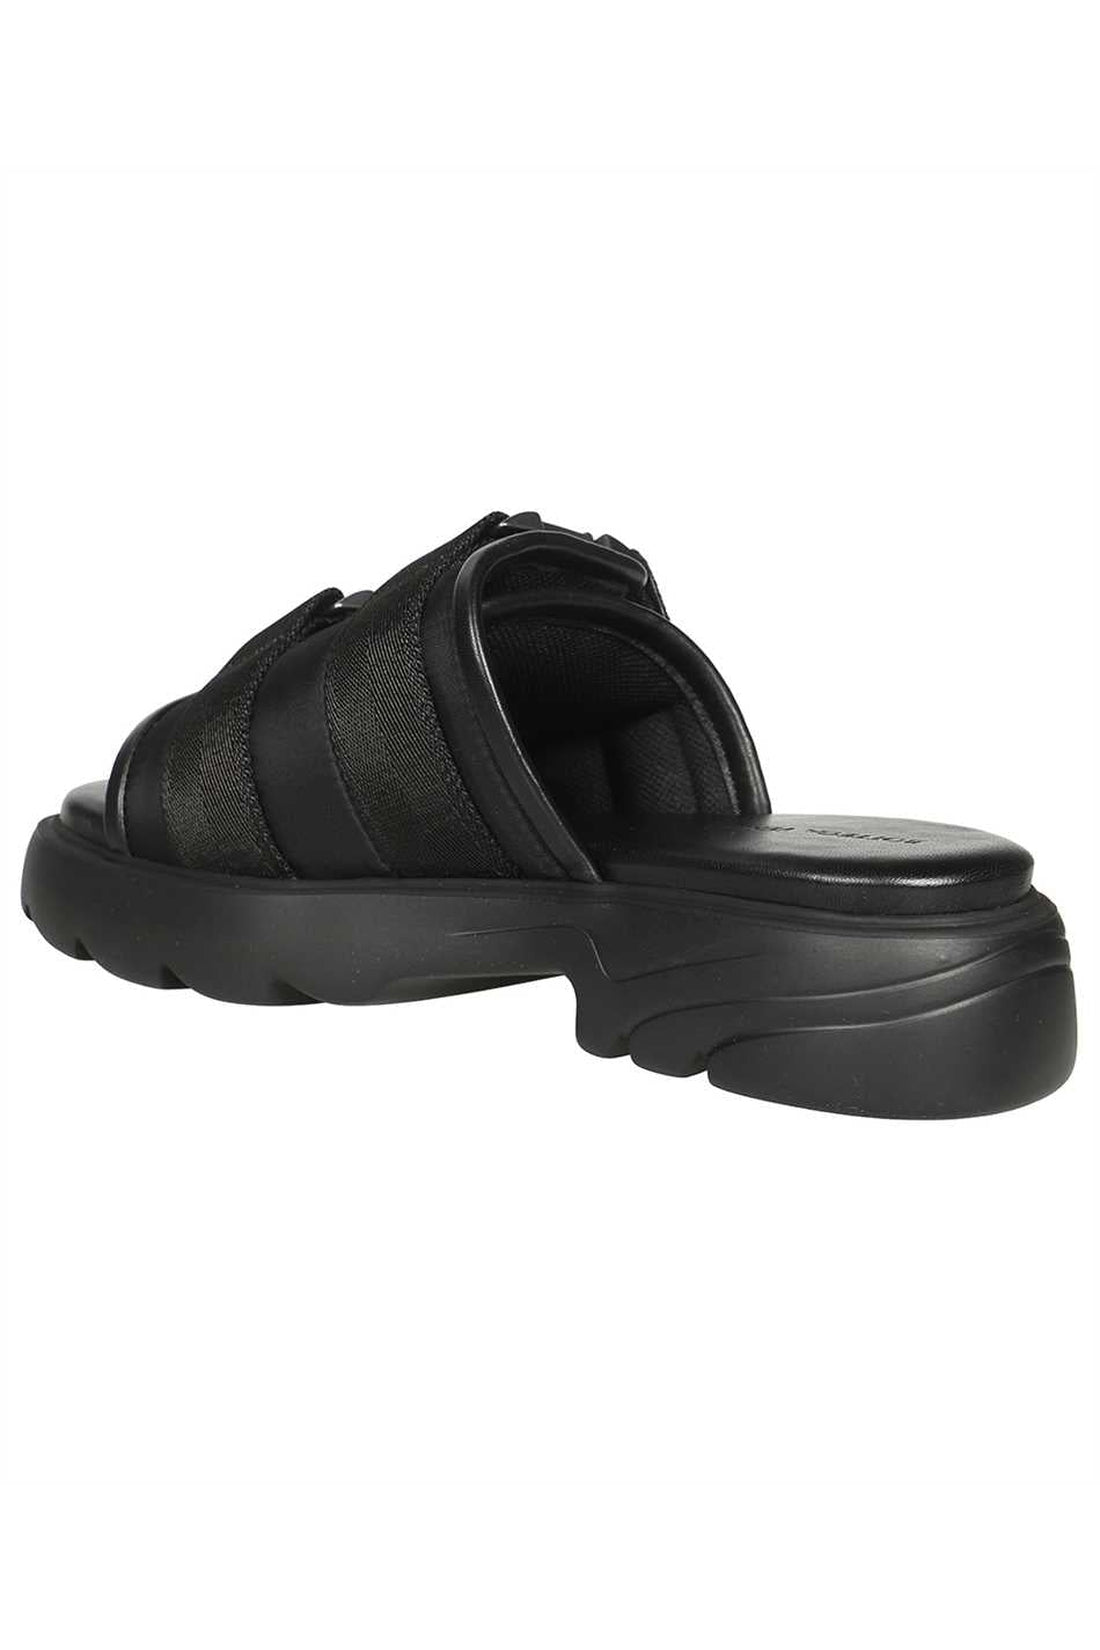 Bottega Veneta-OUTLET-SALE-Flash flat sandals-ARCHIVIST